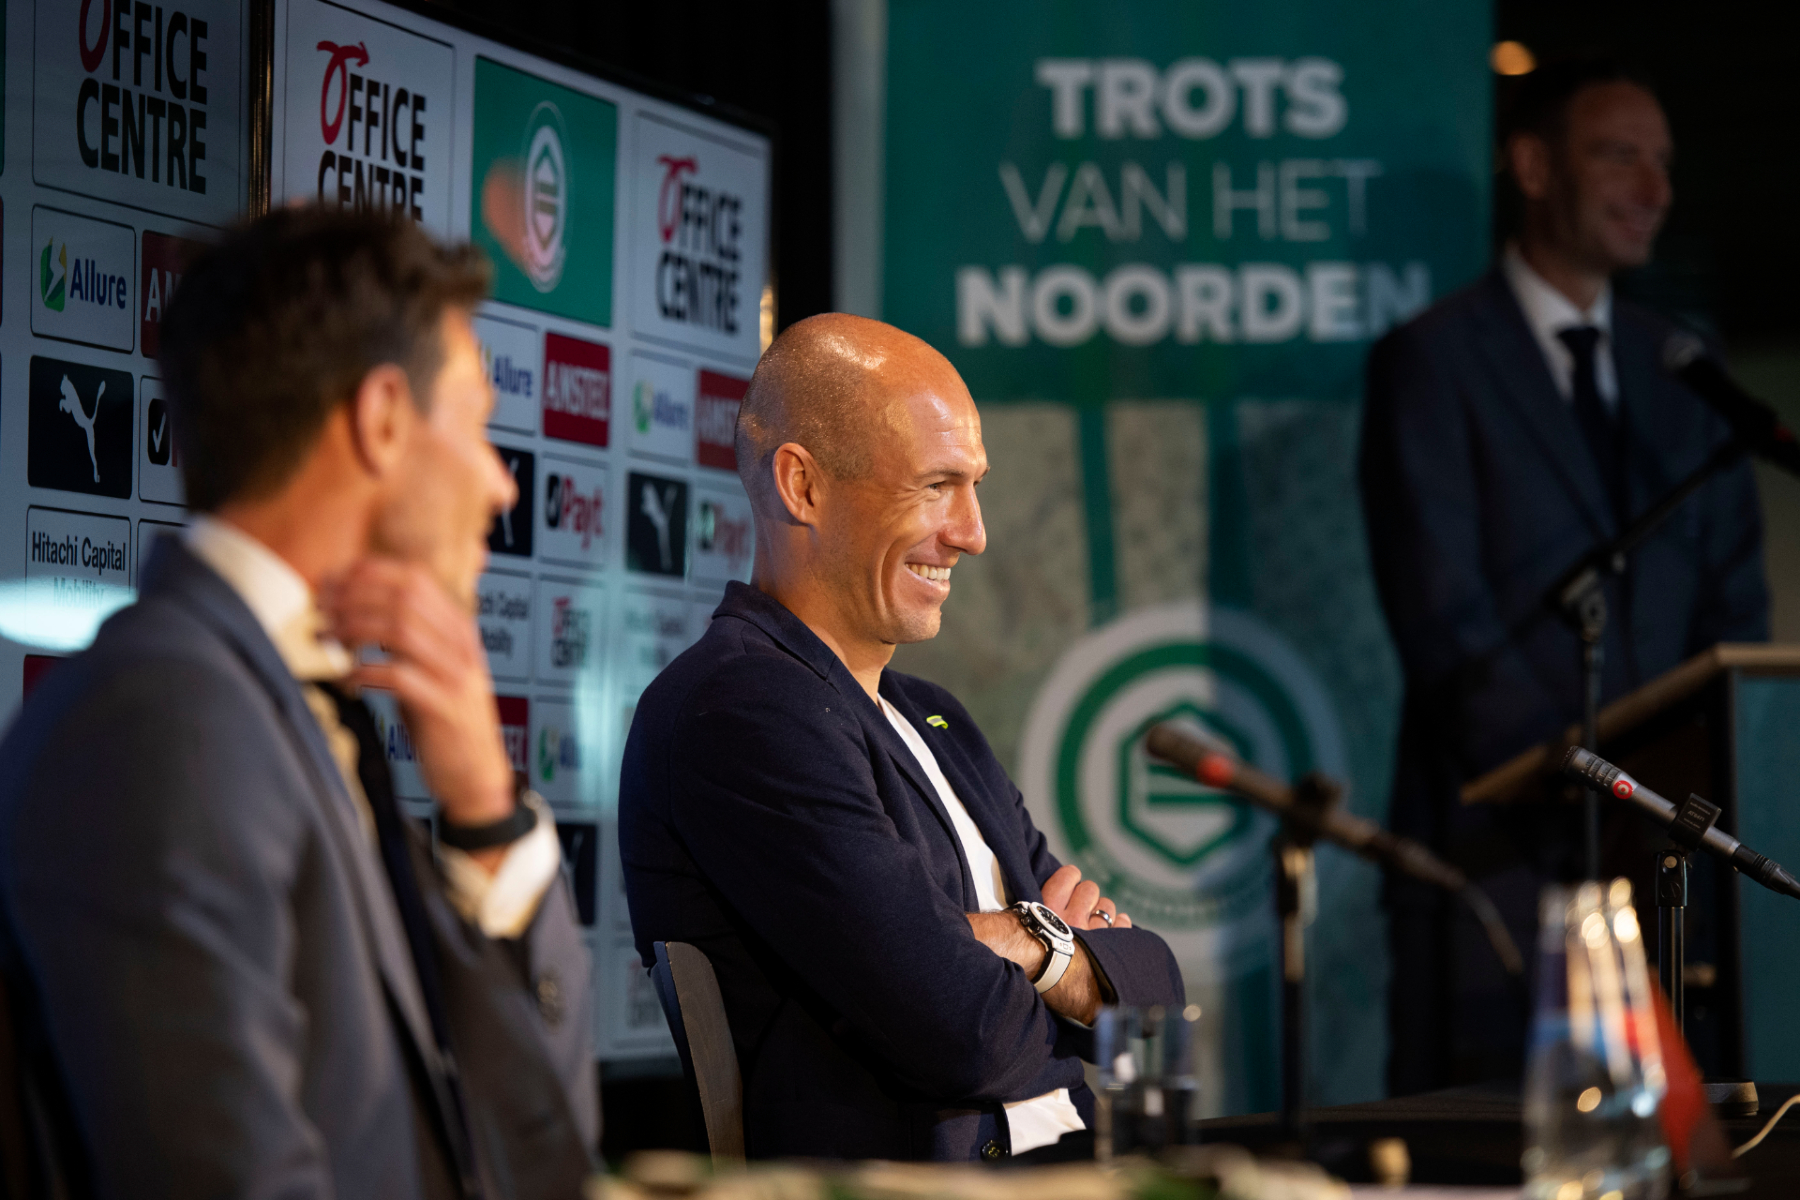 FC Groningen technical director Mark-Jan Fledderus unveils new signing Arjen Robben at a press conference.